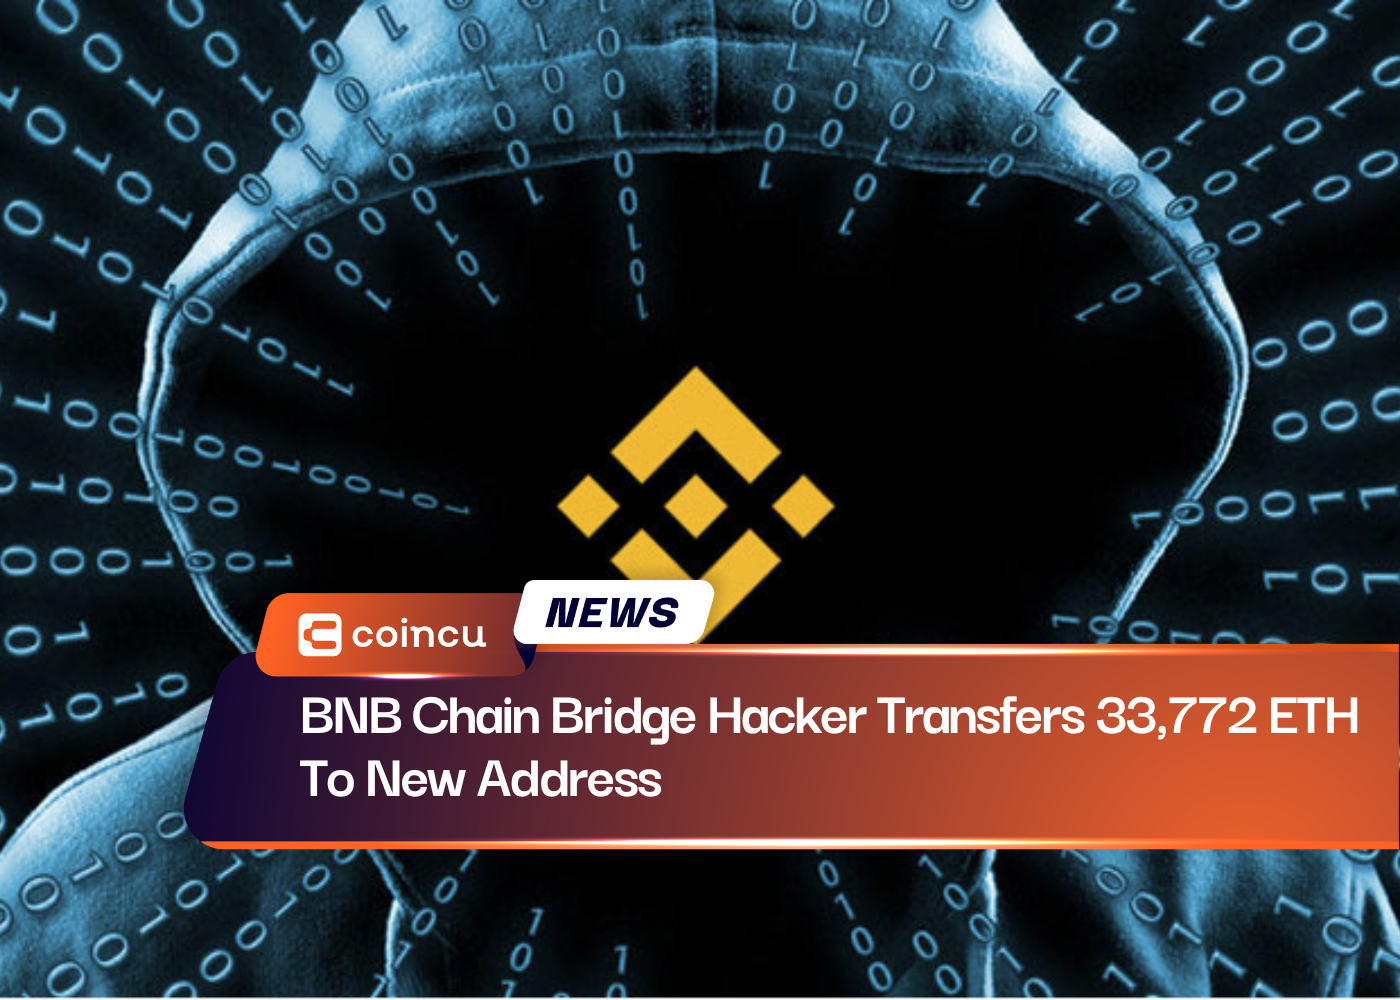 BNB Chain Bridge Hacker Transfers 33,772 ETH To New Address